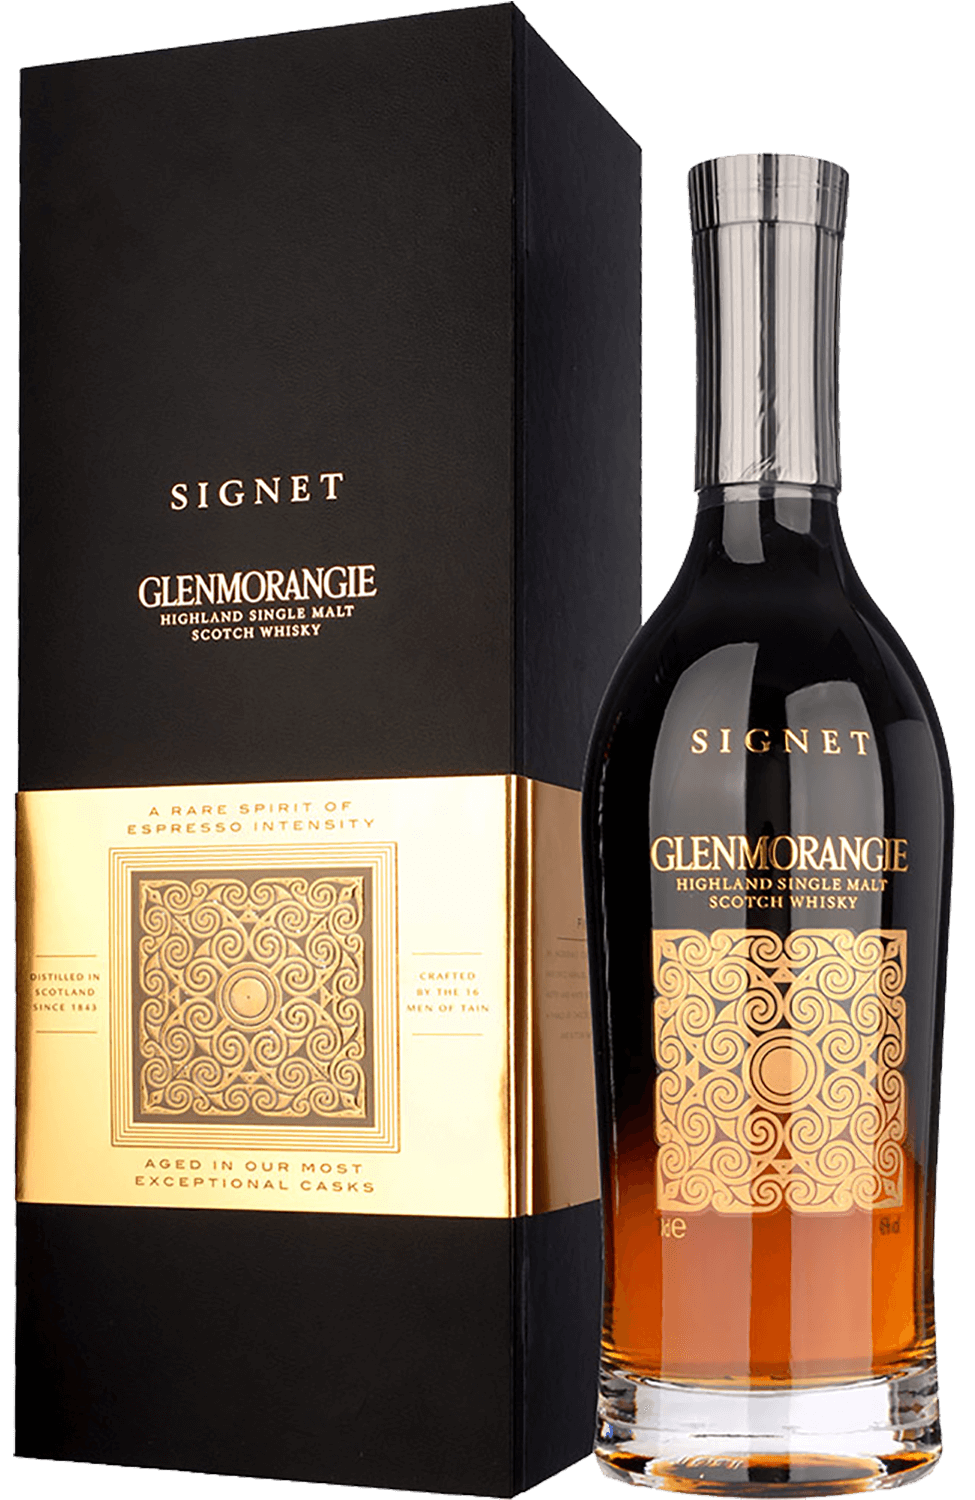 Glenmorangie Signet Single Malt Scotch Whisky (gift box) glenmorangie original highland single malt scotch whisky 10 y o gift box